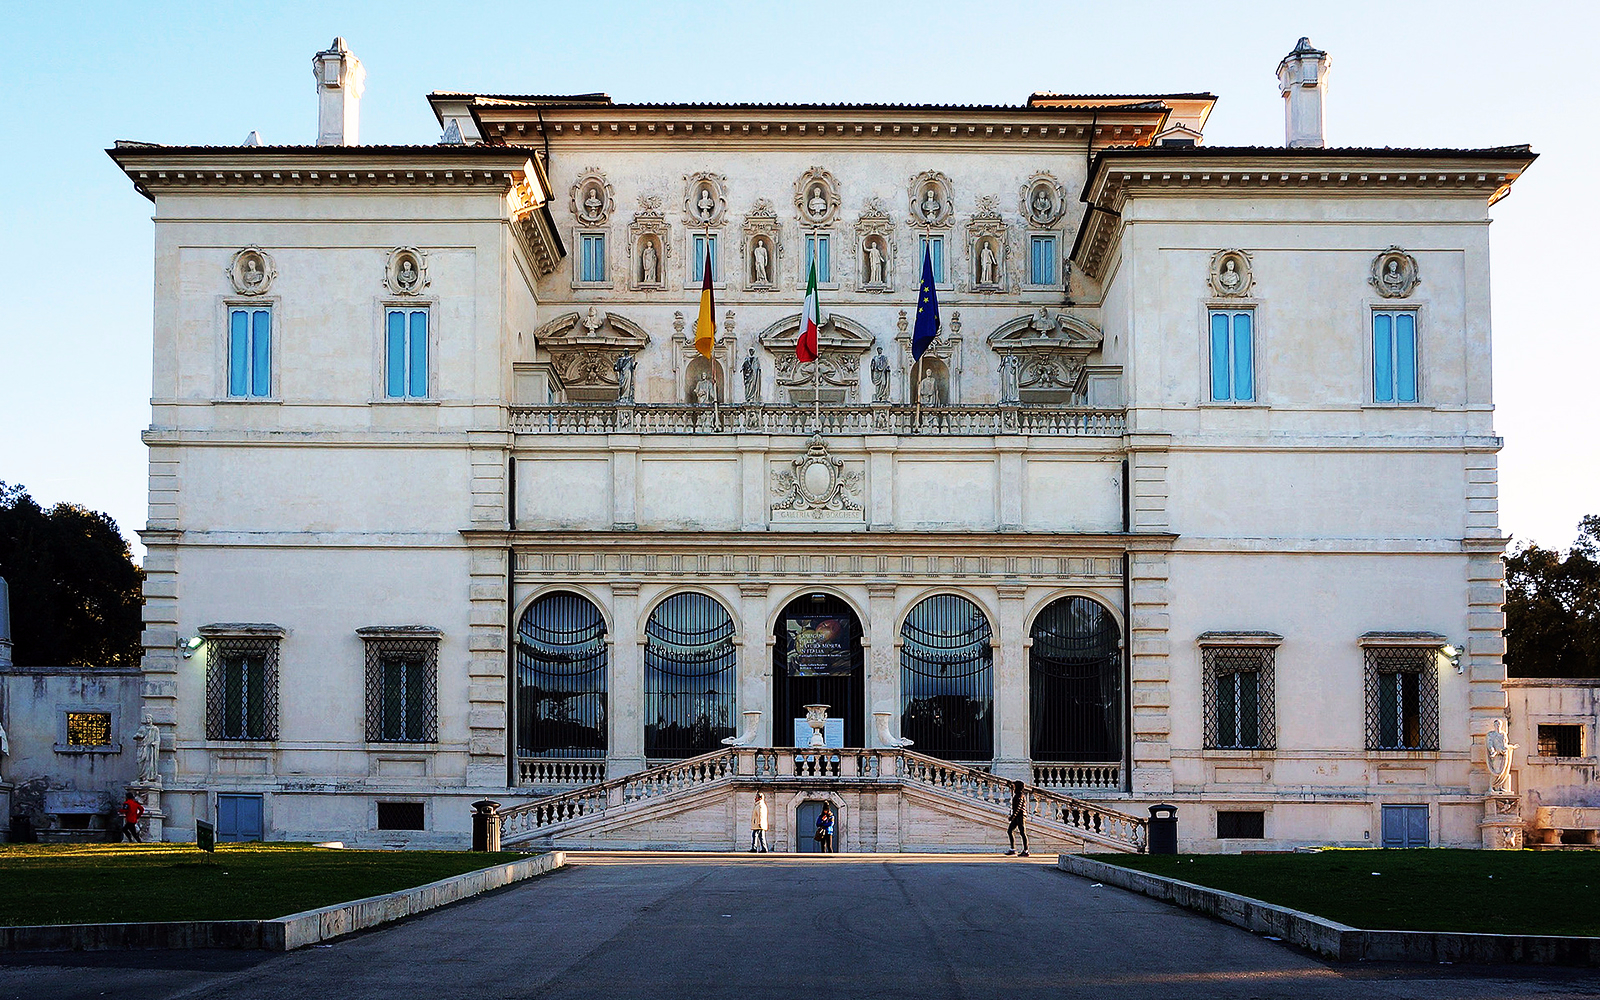 Borghese Gallery entrance